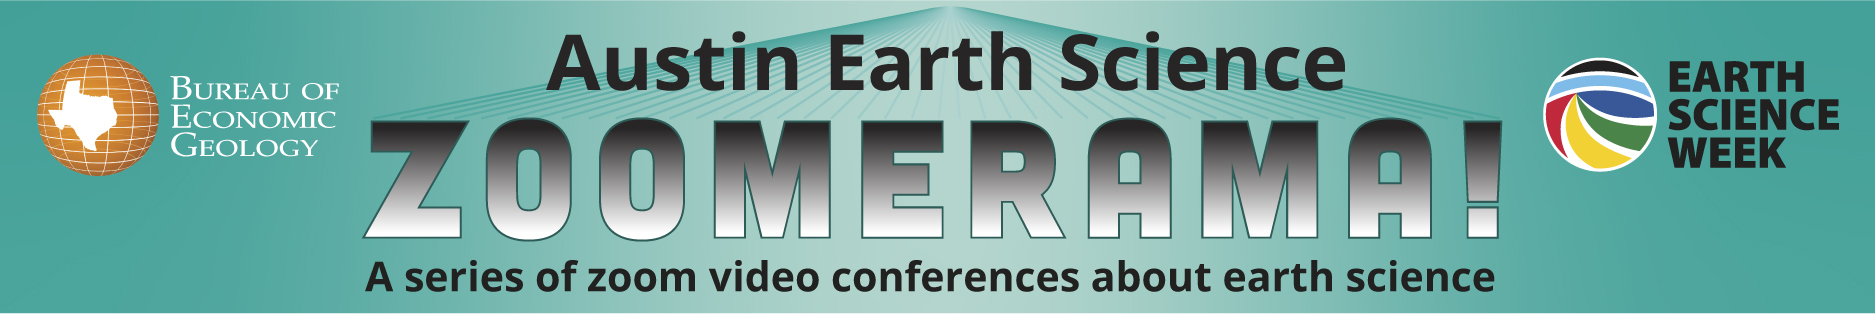 Zoomerama Earth Science Week banner 2020